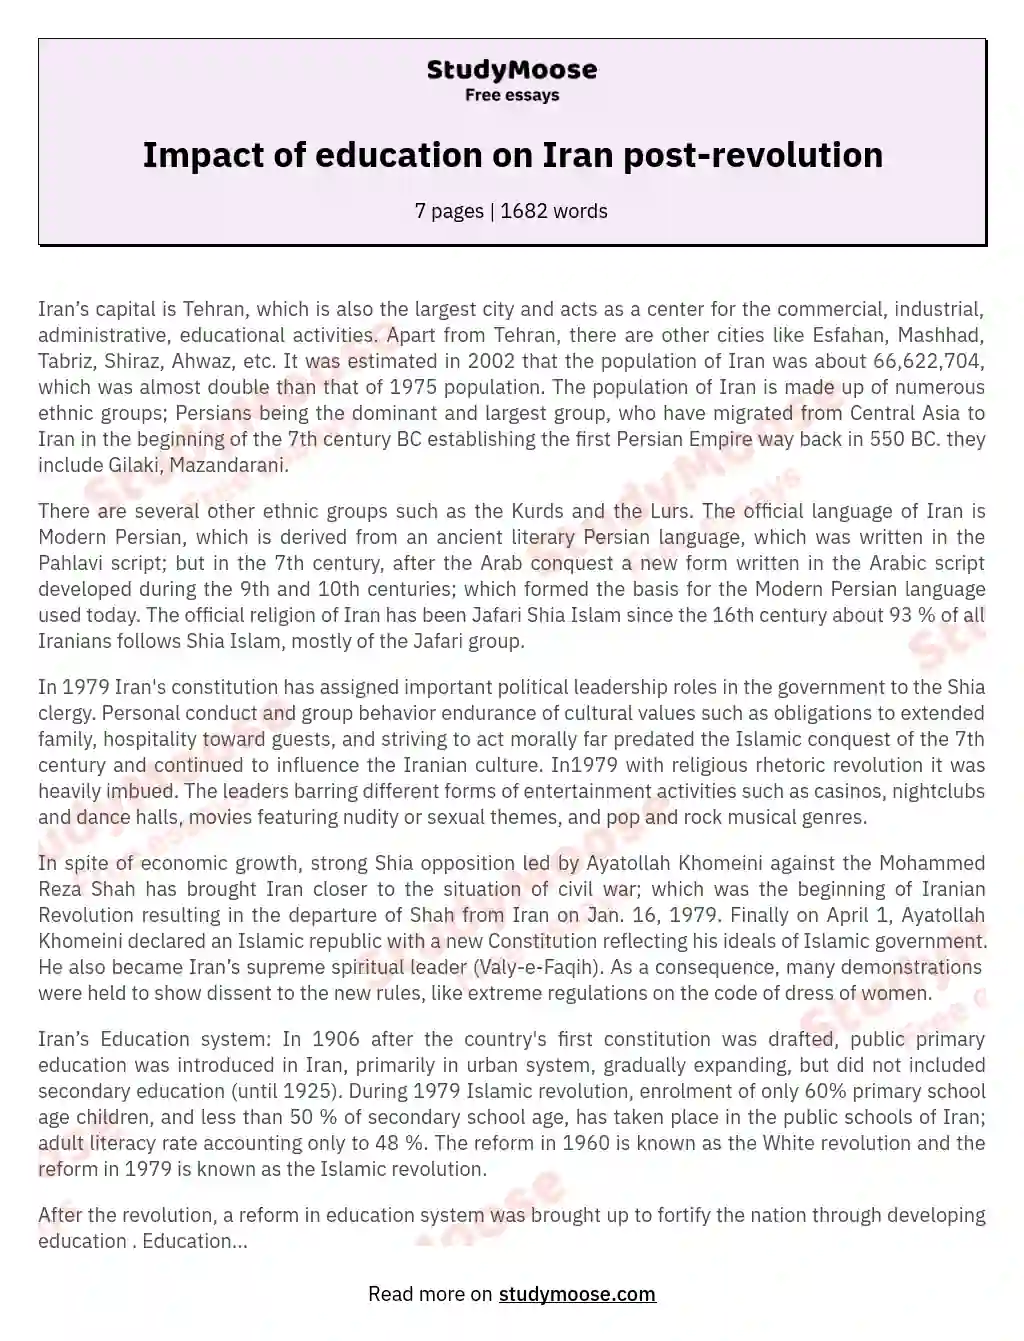 Impact of education on Iran post-revolution